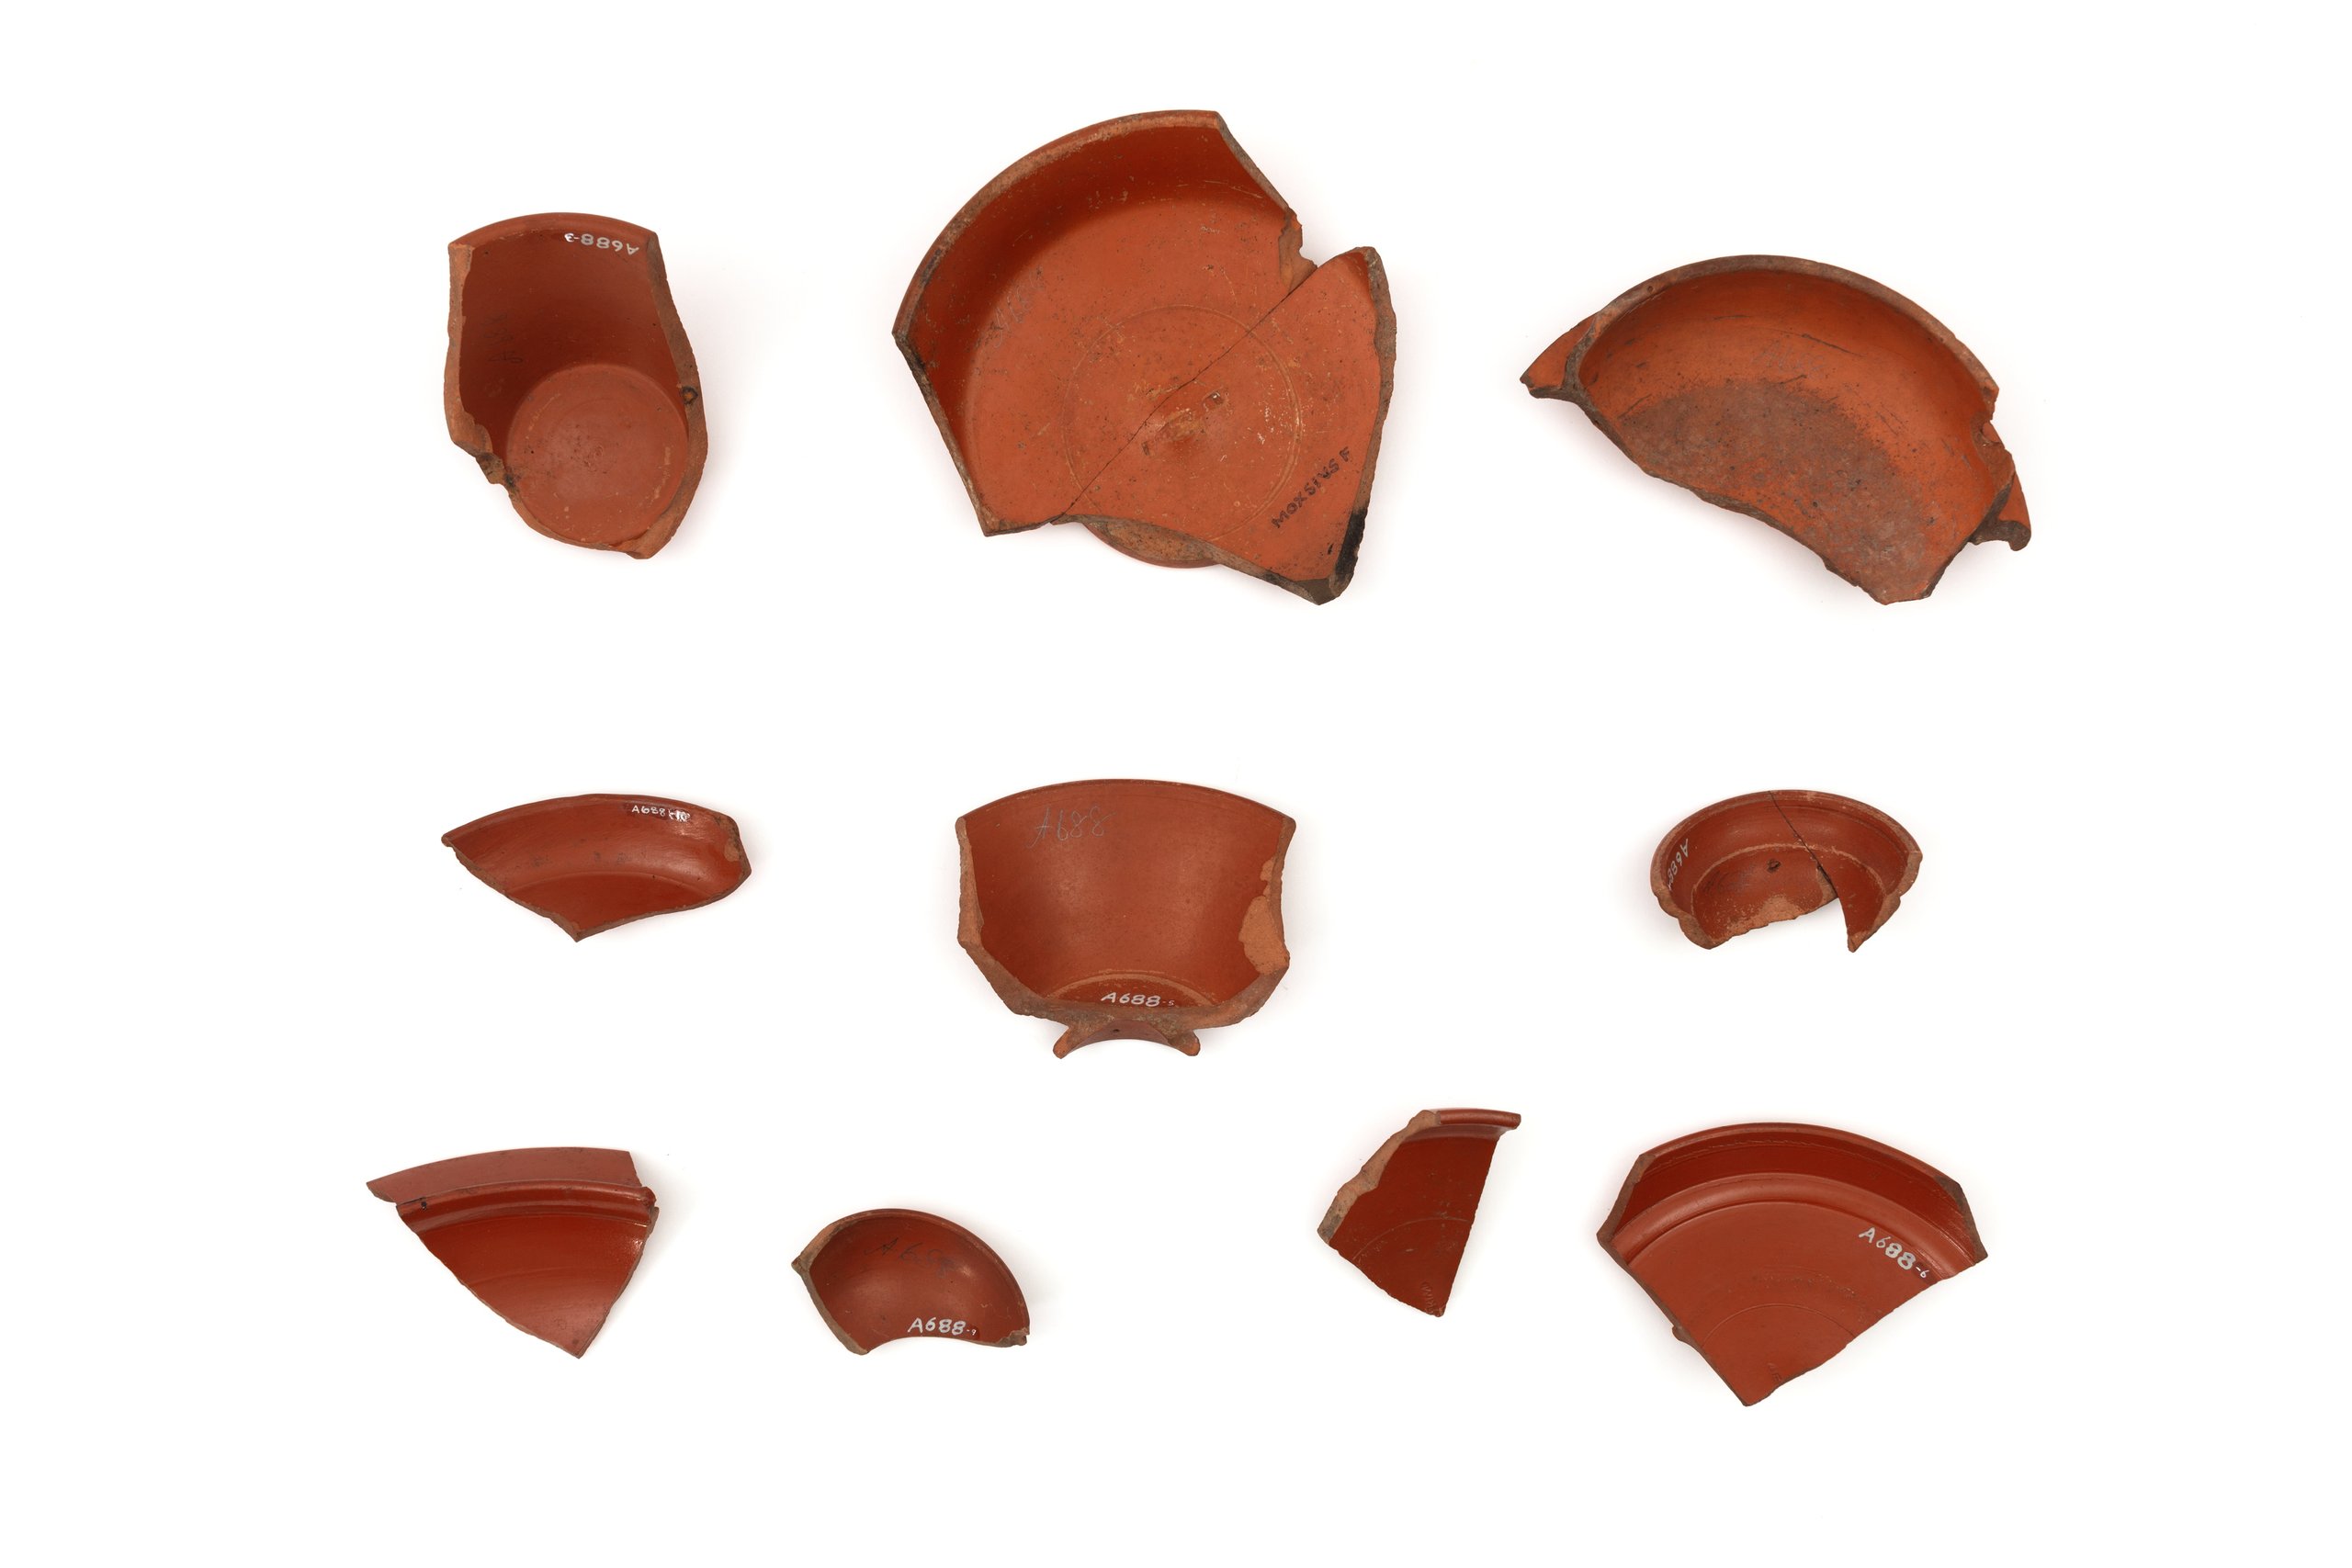 10 pottery sherds of terra sigillata